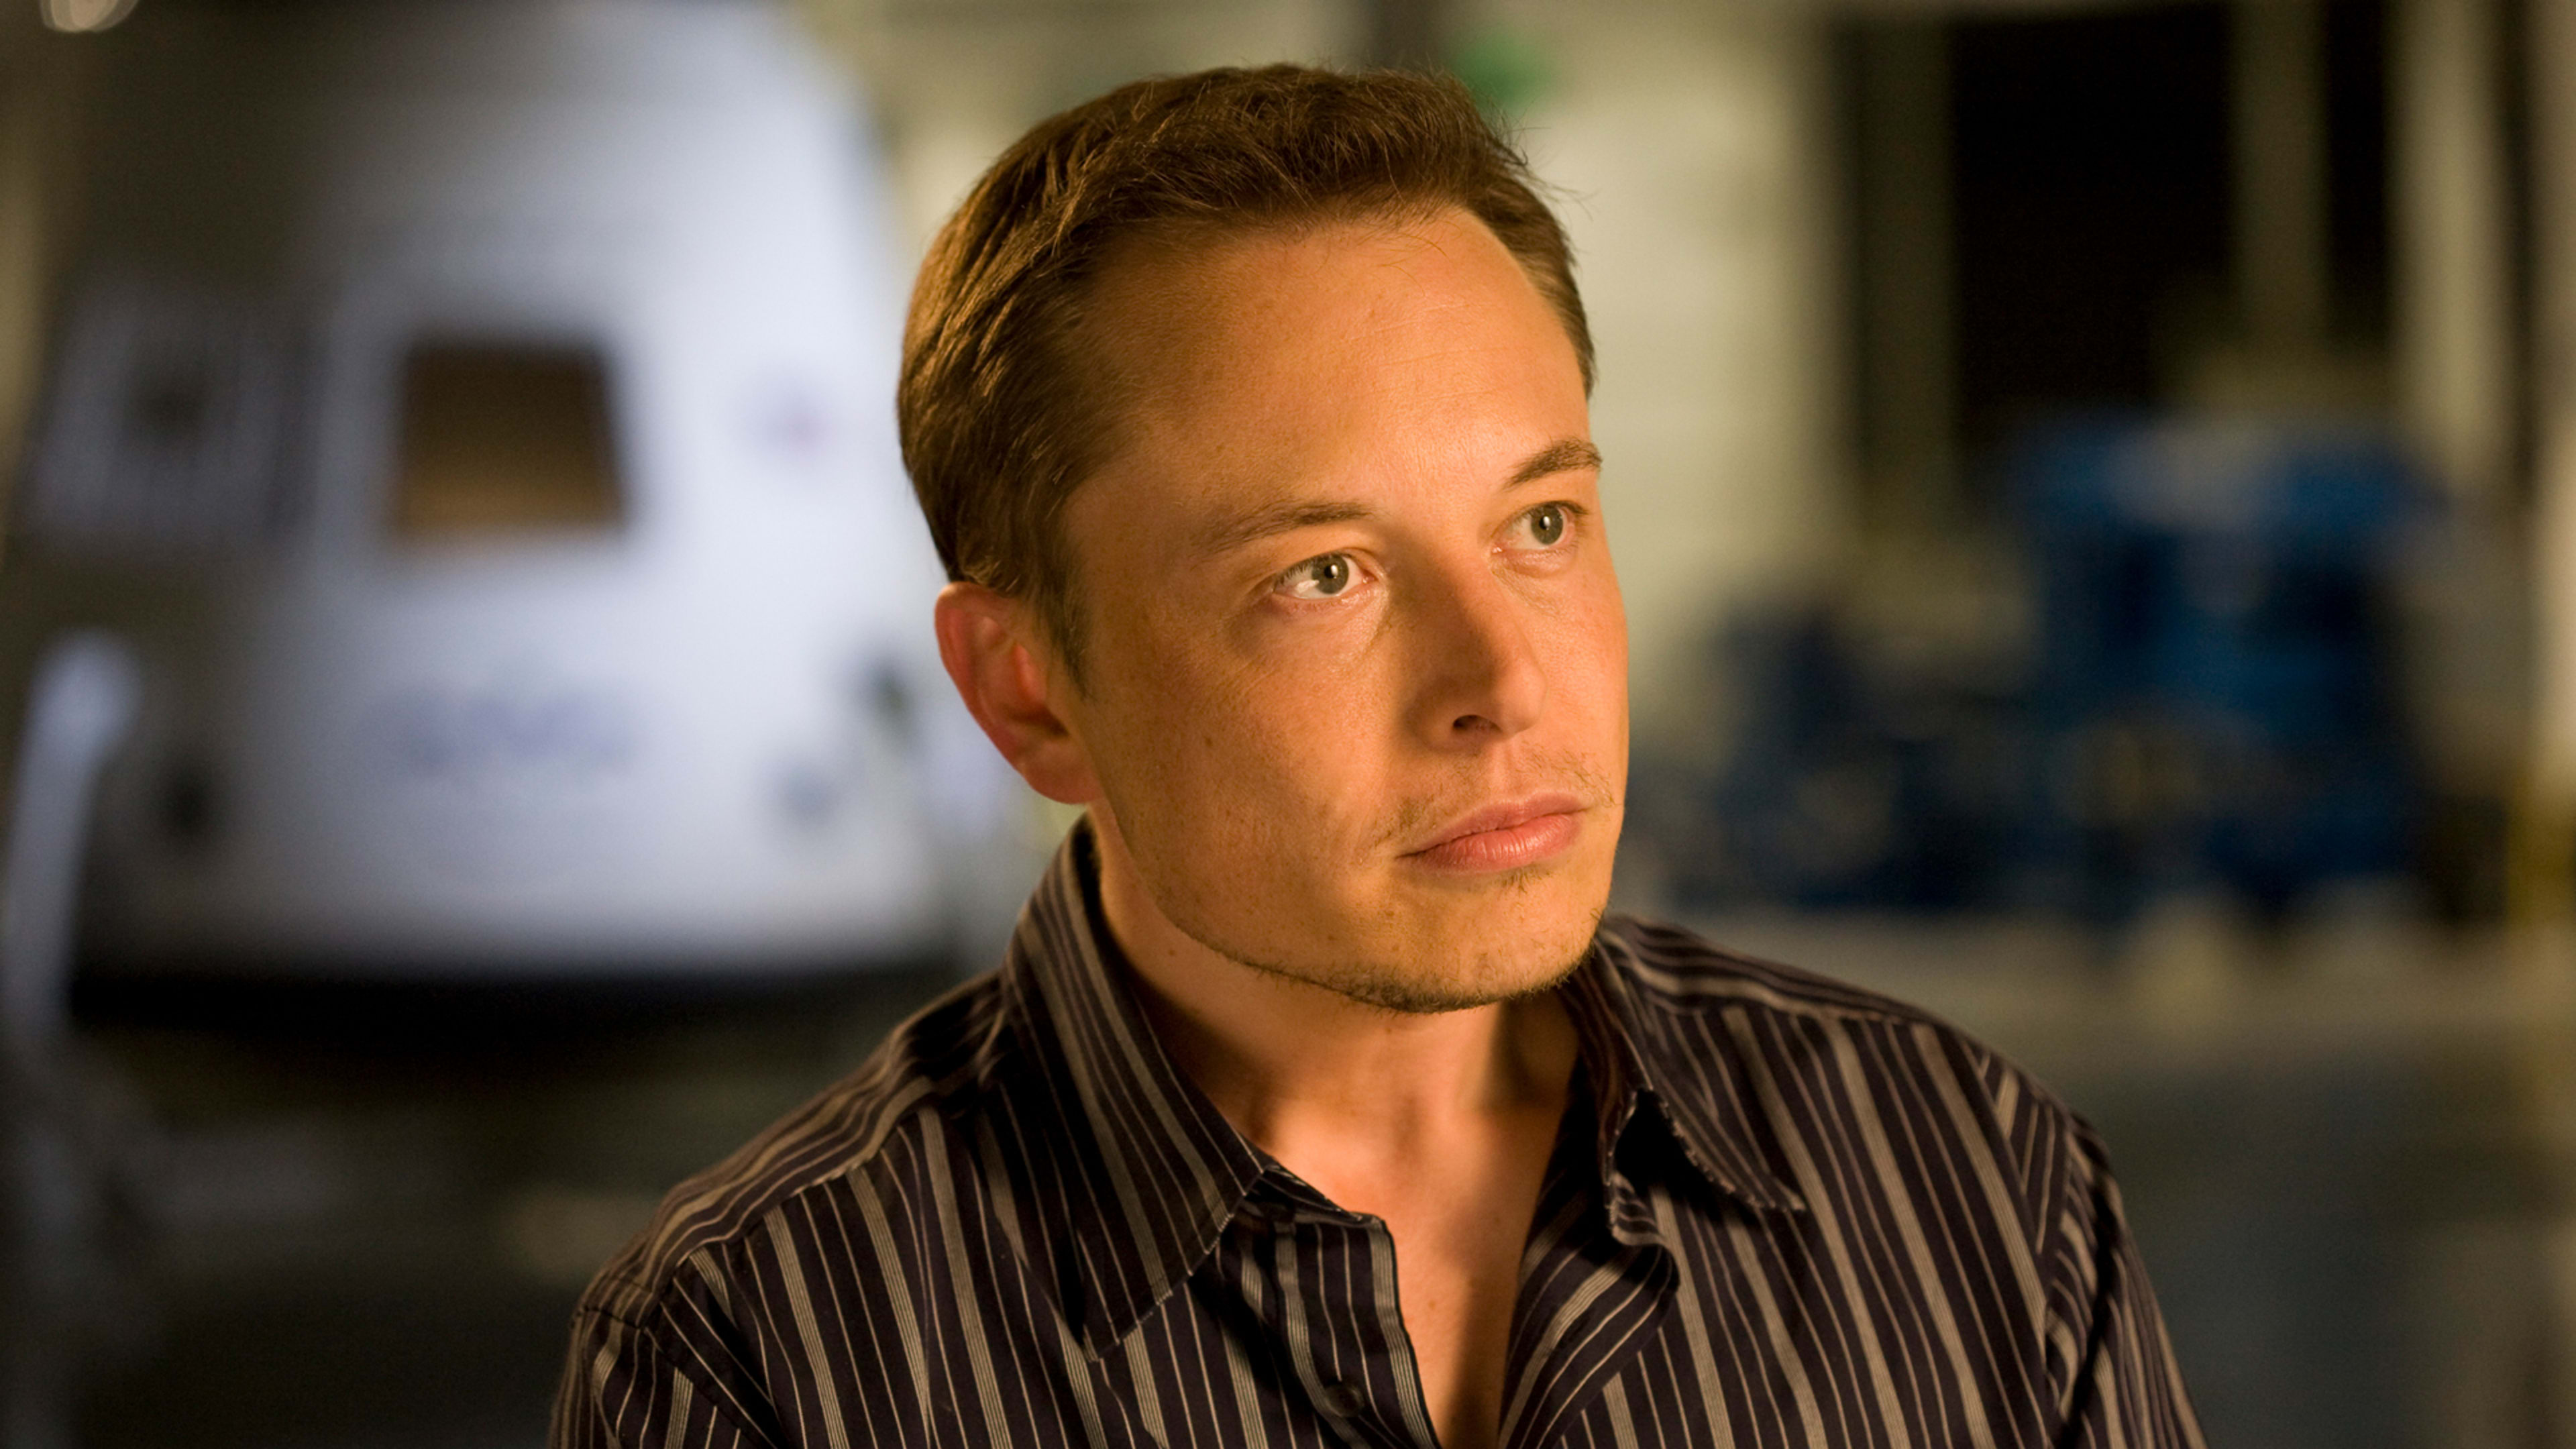 Elon Musk apologizes for calling Thailand cave diver a “pedo”